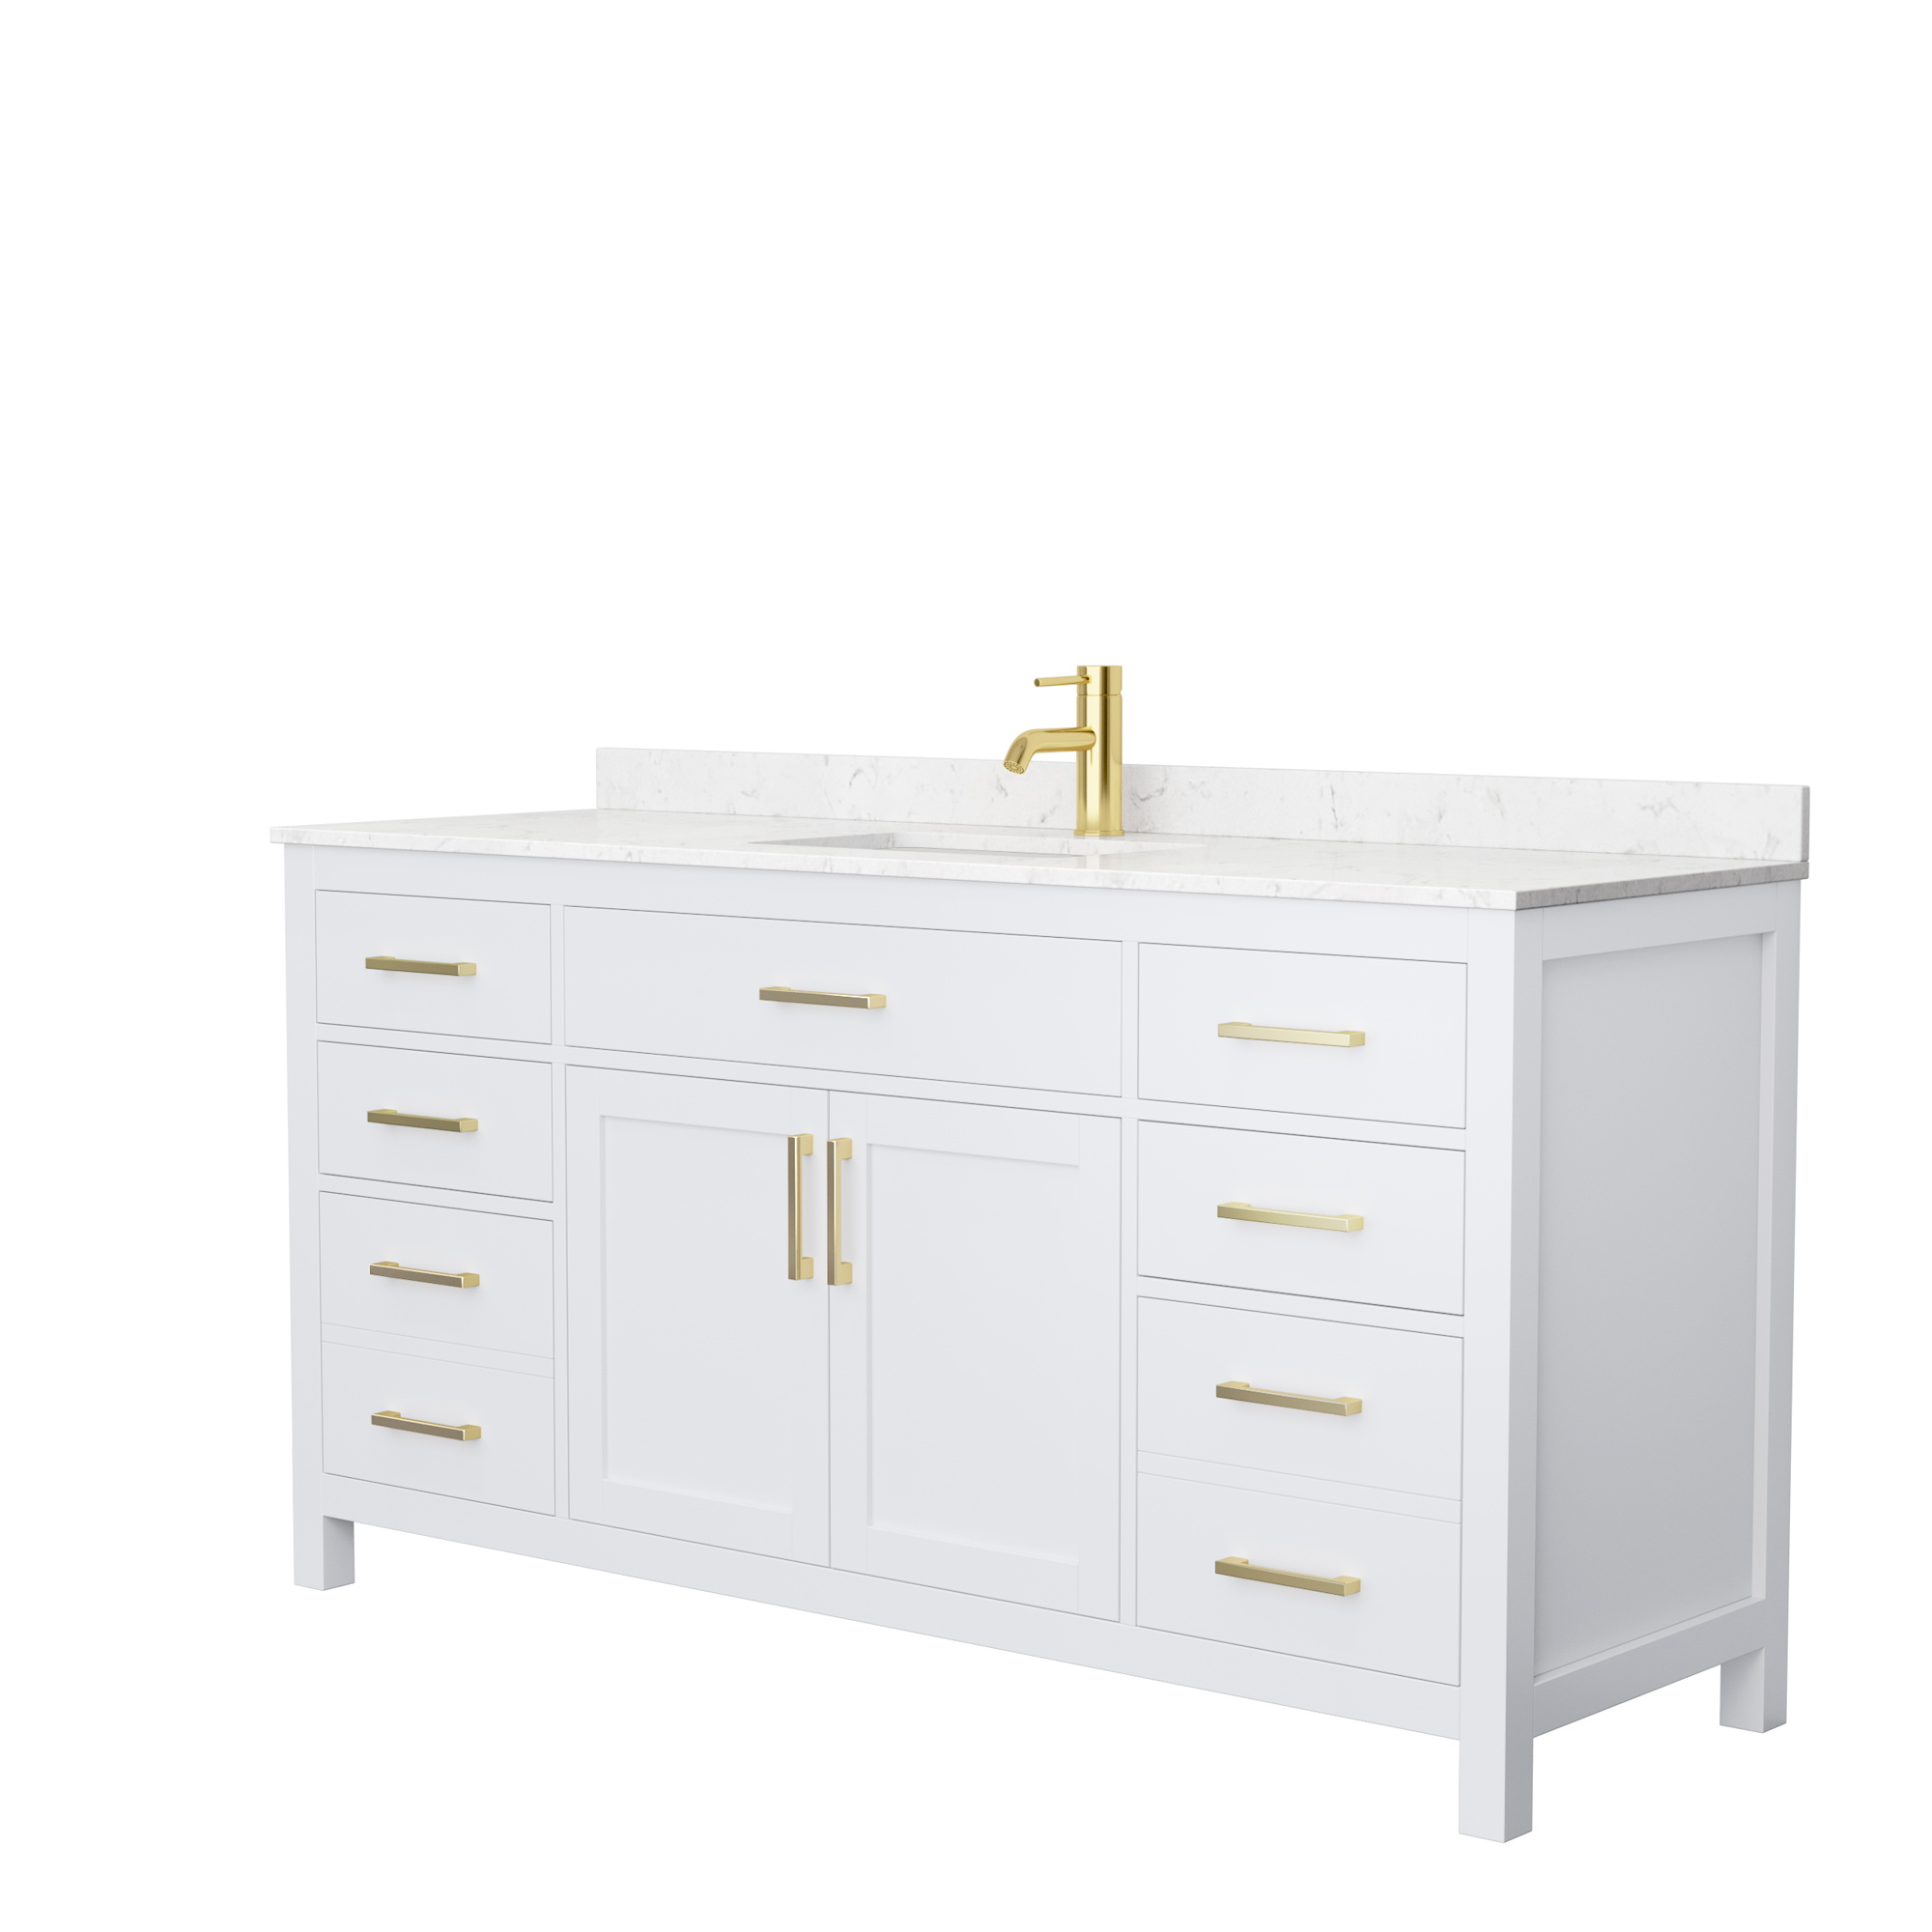 beckett 66" single bathroom vanity by wyndham collection - white